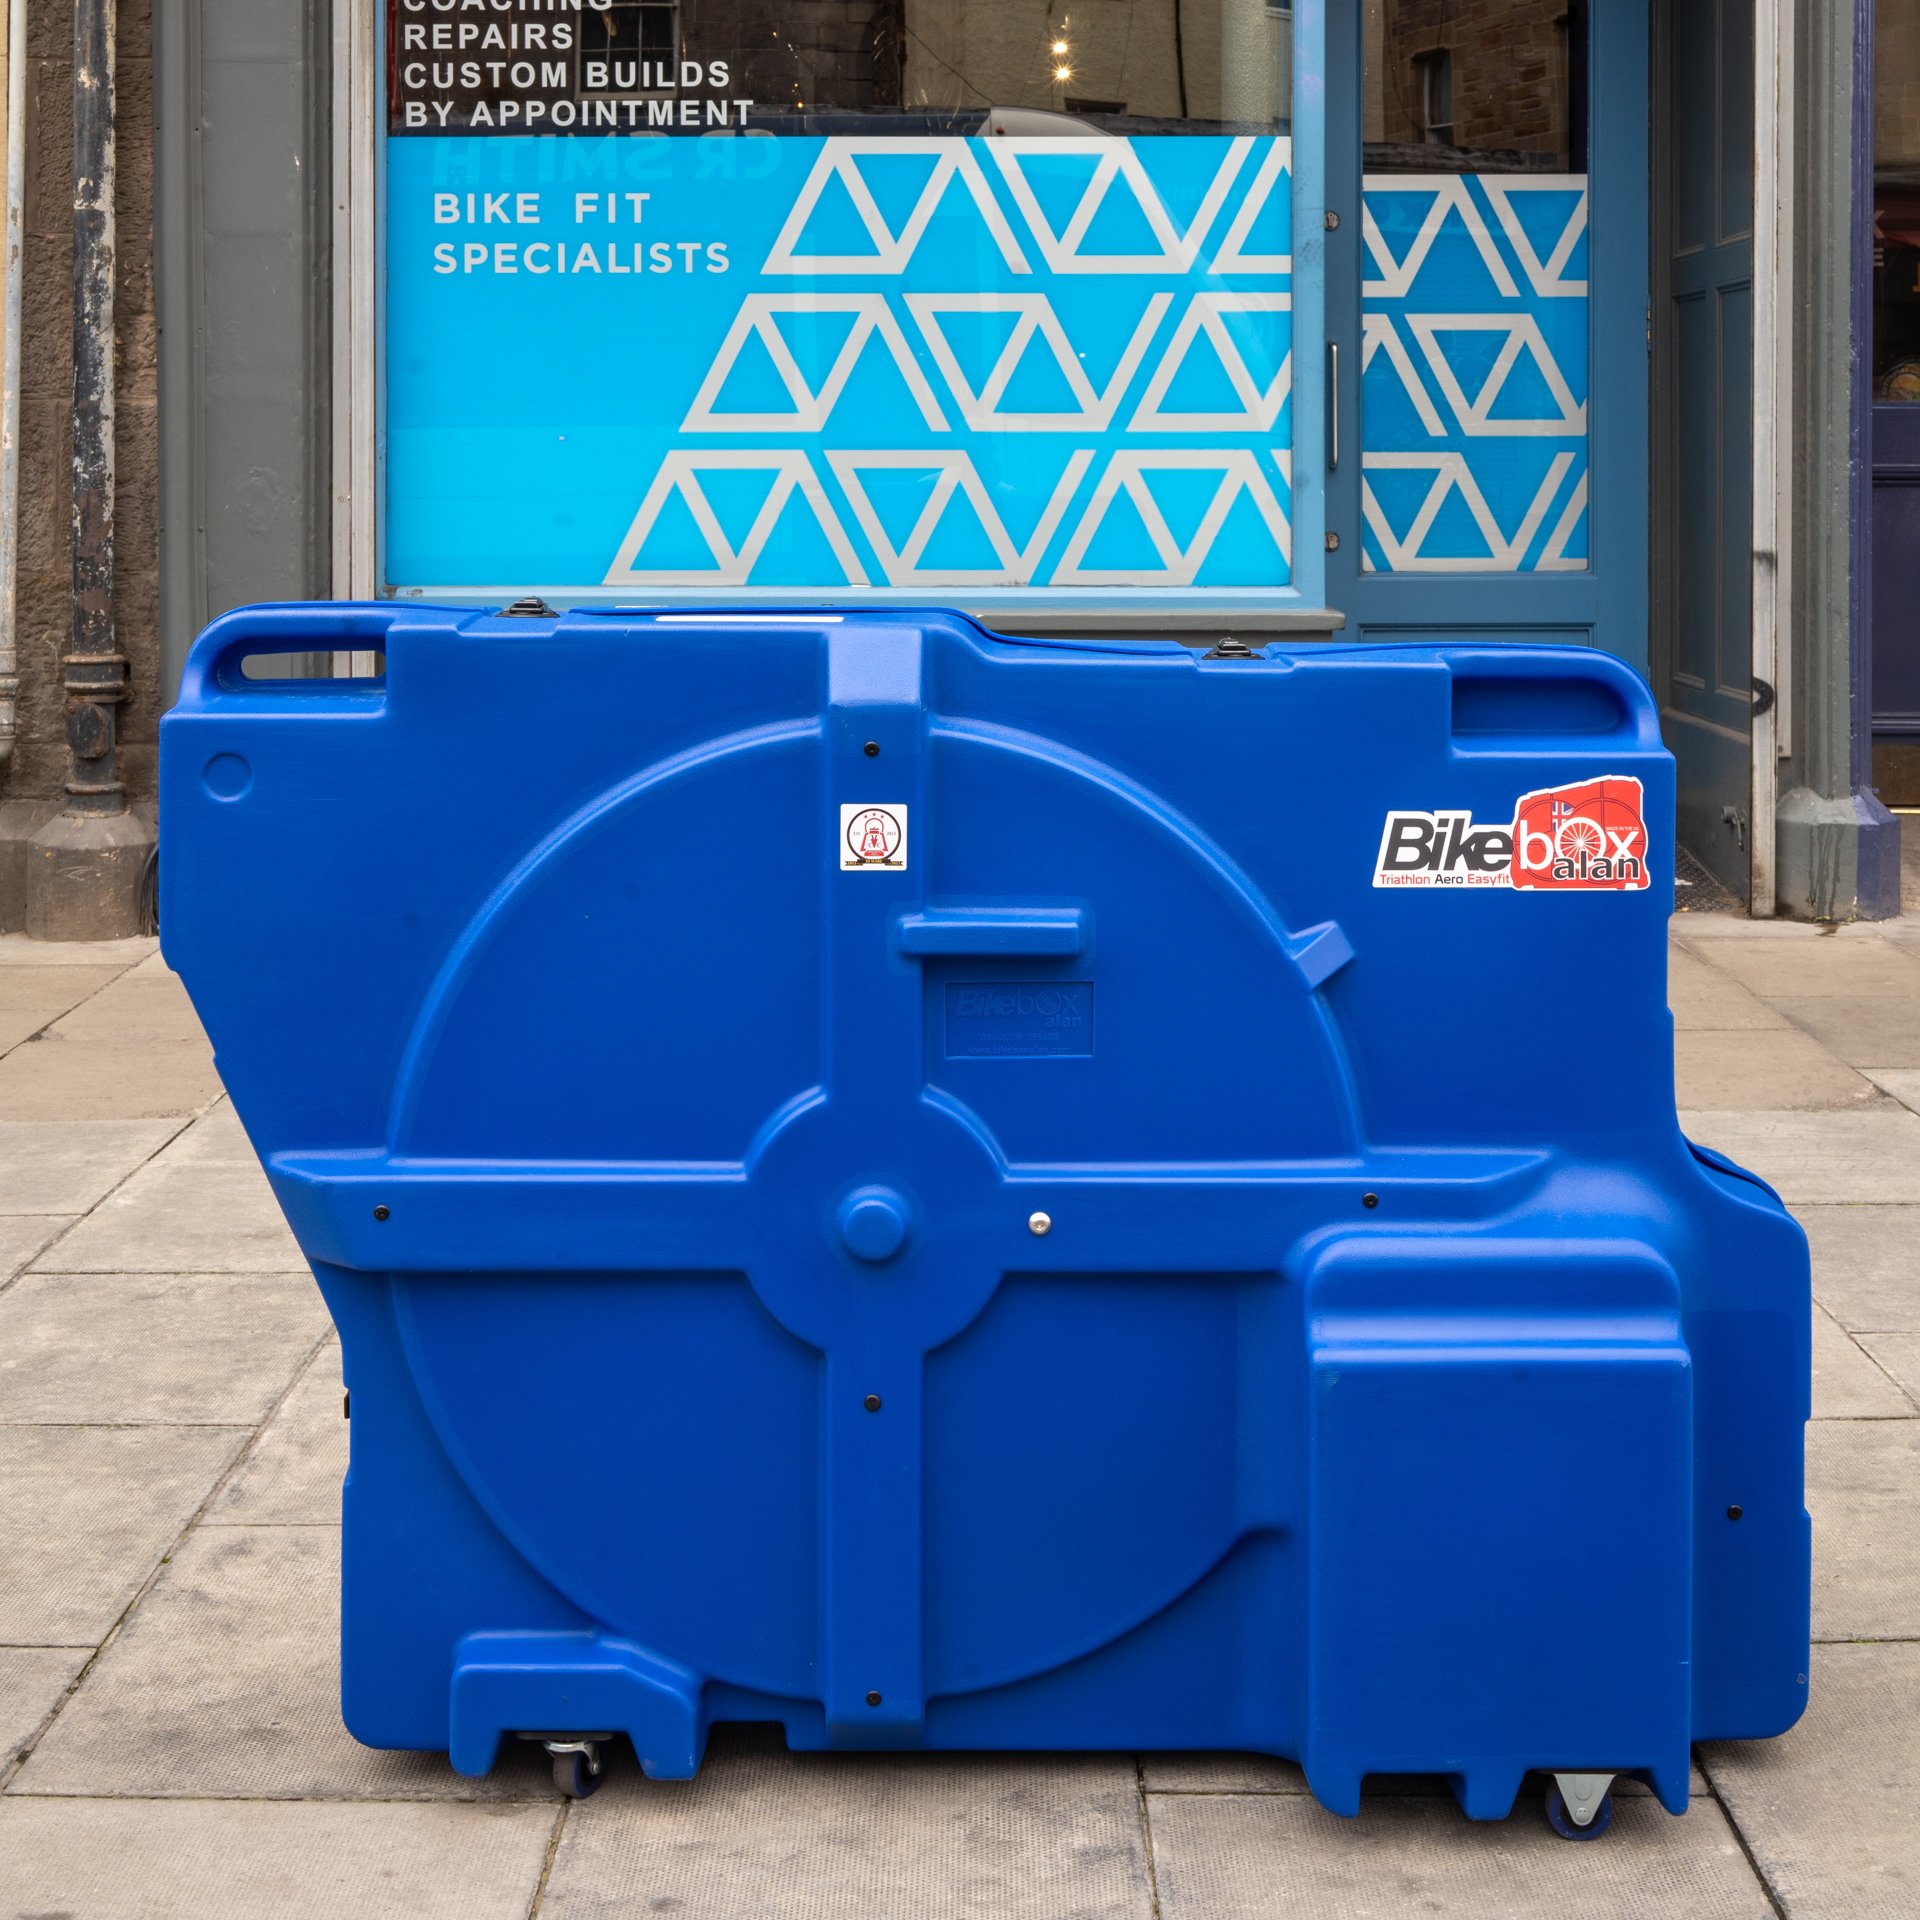 Blue bike box ready for hire